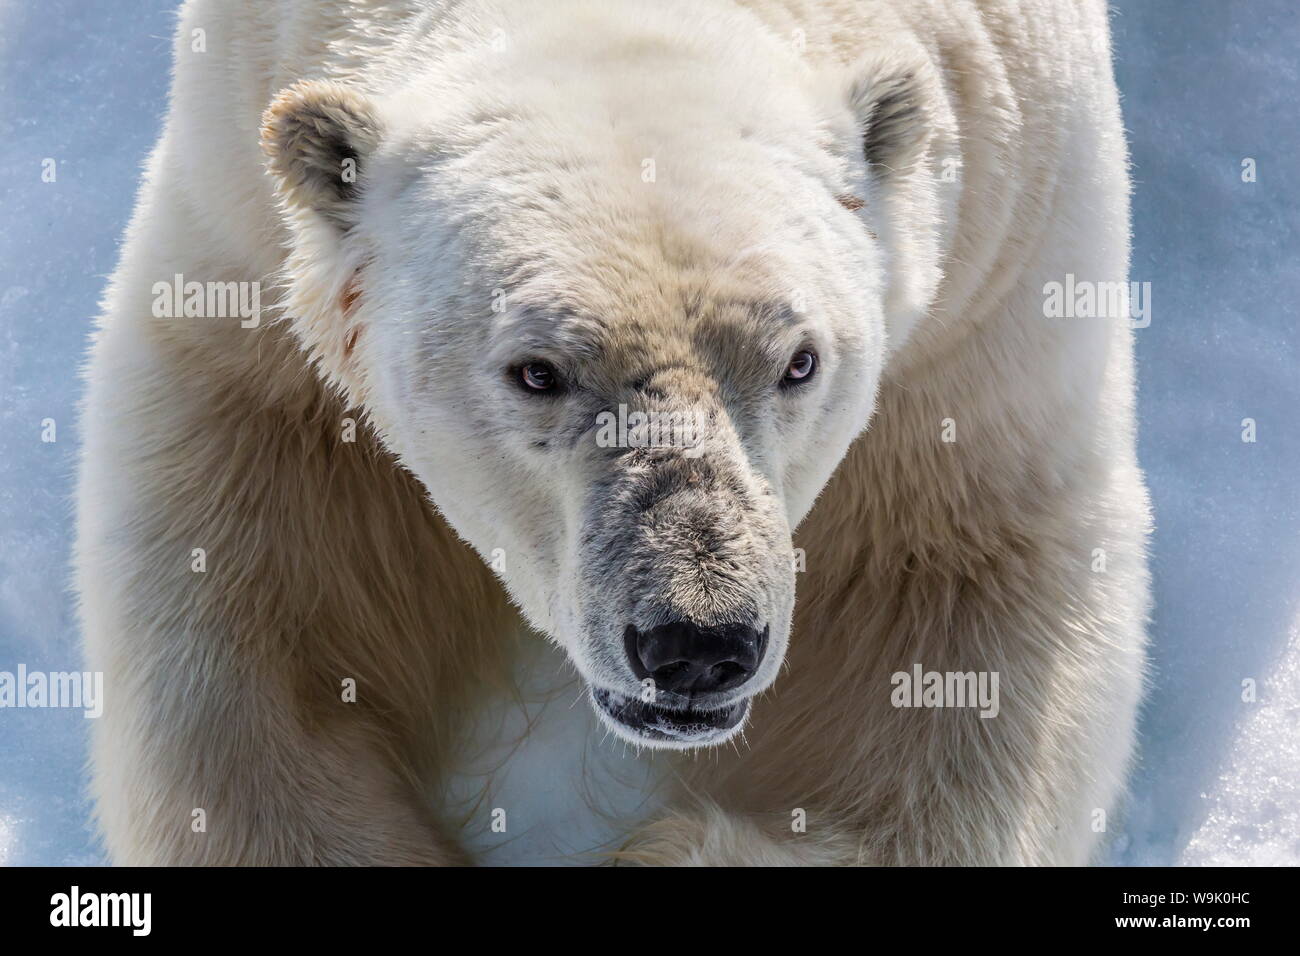 Adulto el oso polar (Ursus maritimus) cerrar la cabeza detalle, Cumberland, Península de la isla de Baffin, Nunavut, Canadá, Norteamérica Foto de stock